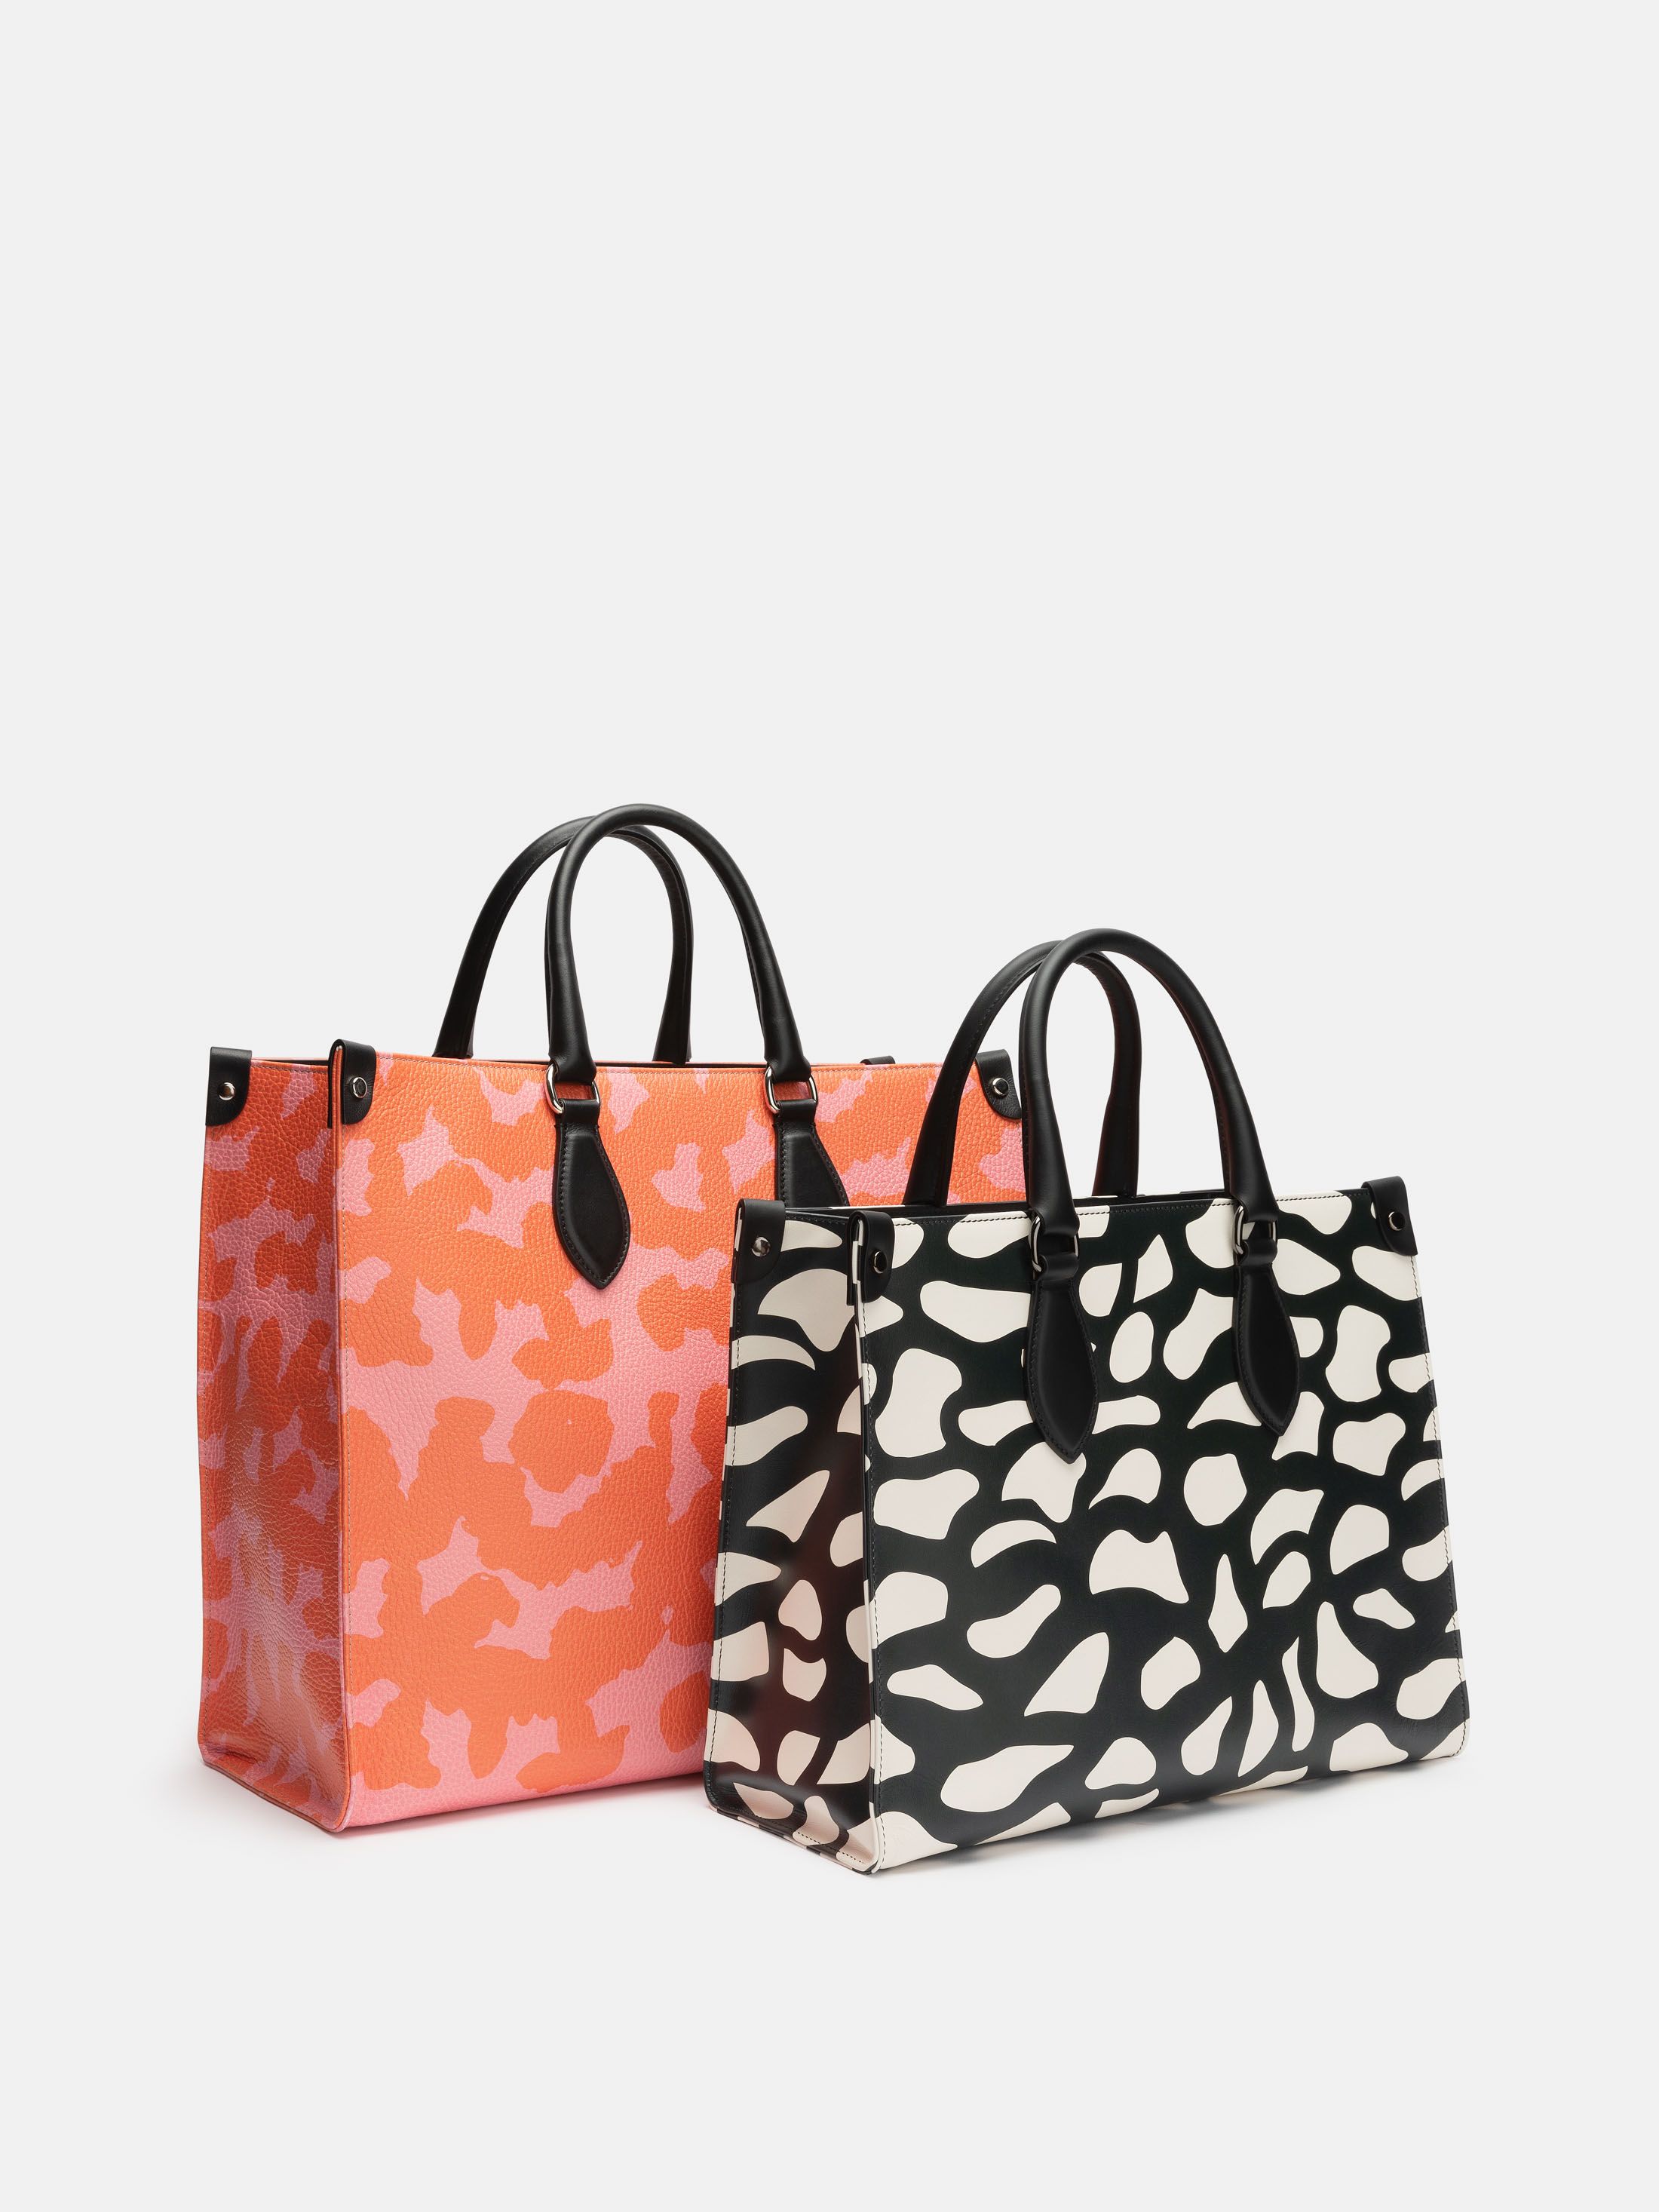 custom shopper bag design